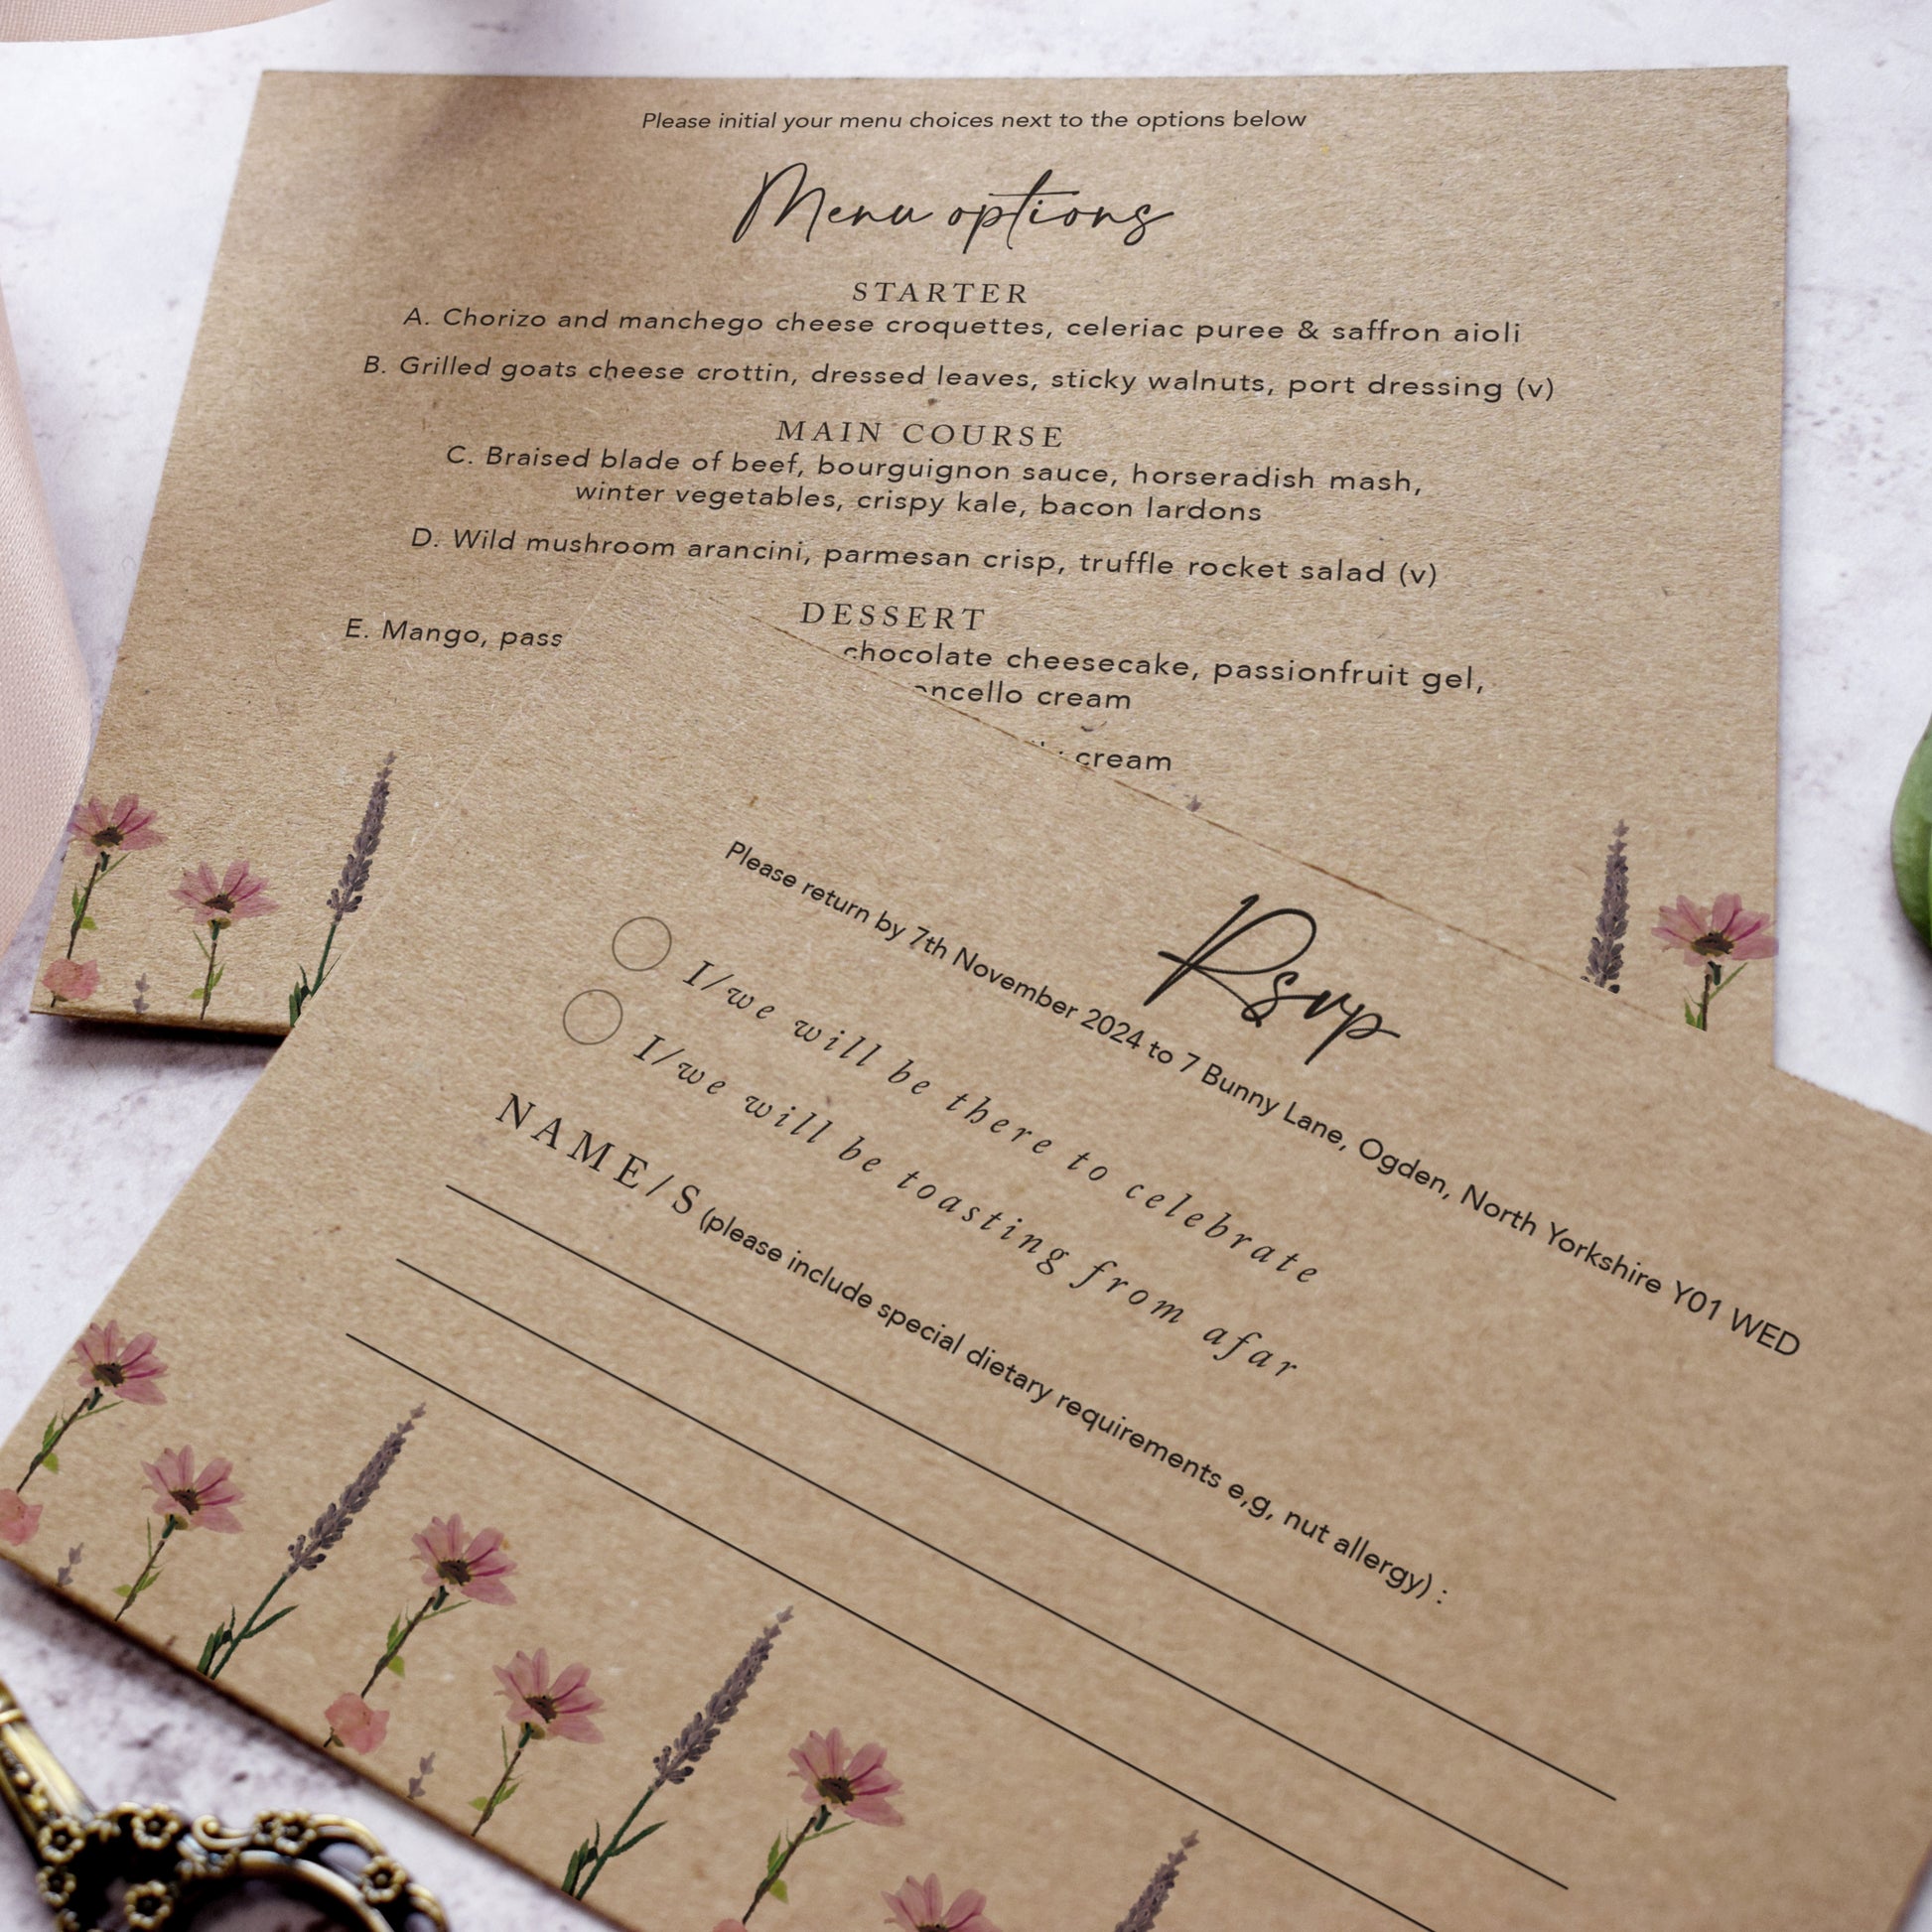 Wedding invitations printed onto Kraft card for a rustic wedding